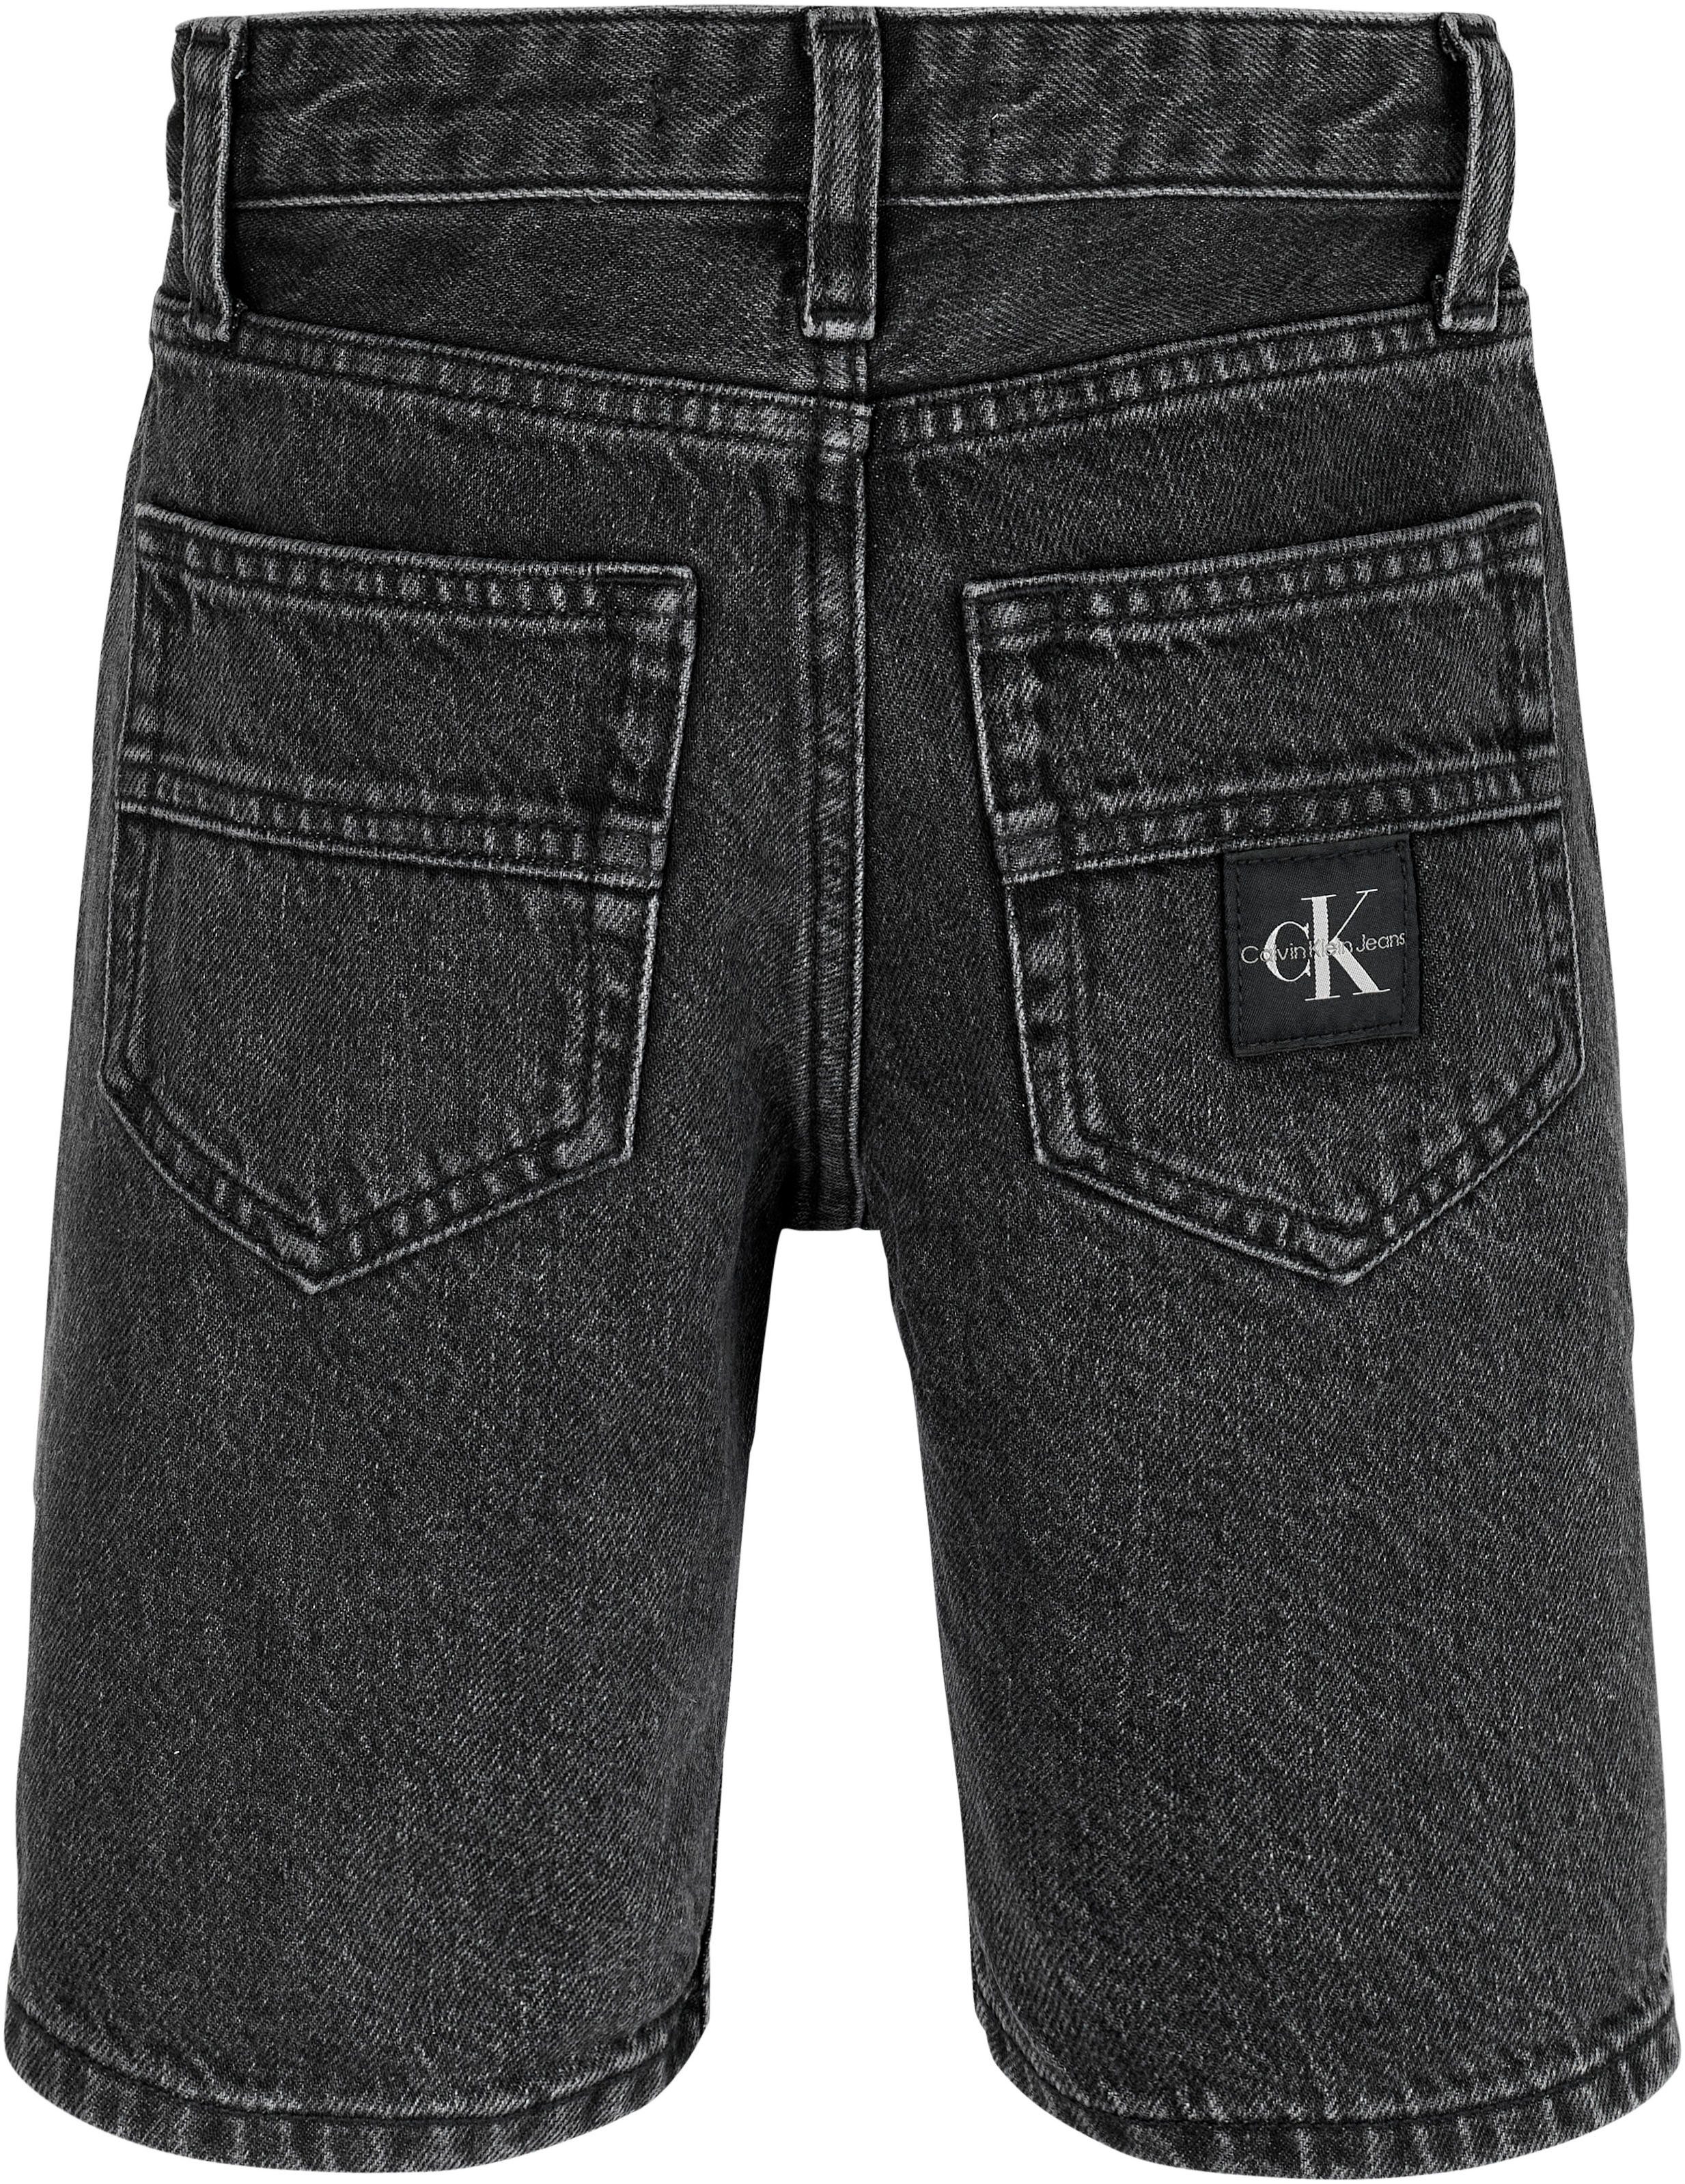 Calvin Klein Jeans SHORTS RELAXED DENIM Shorts 5-Poket-Style im